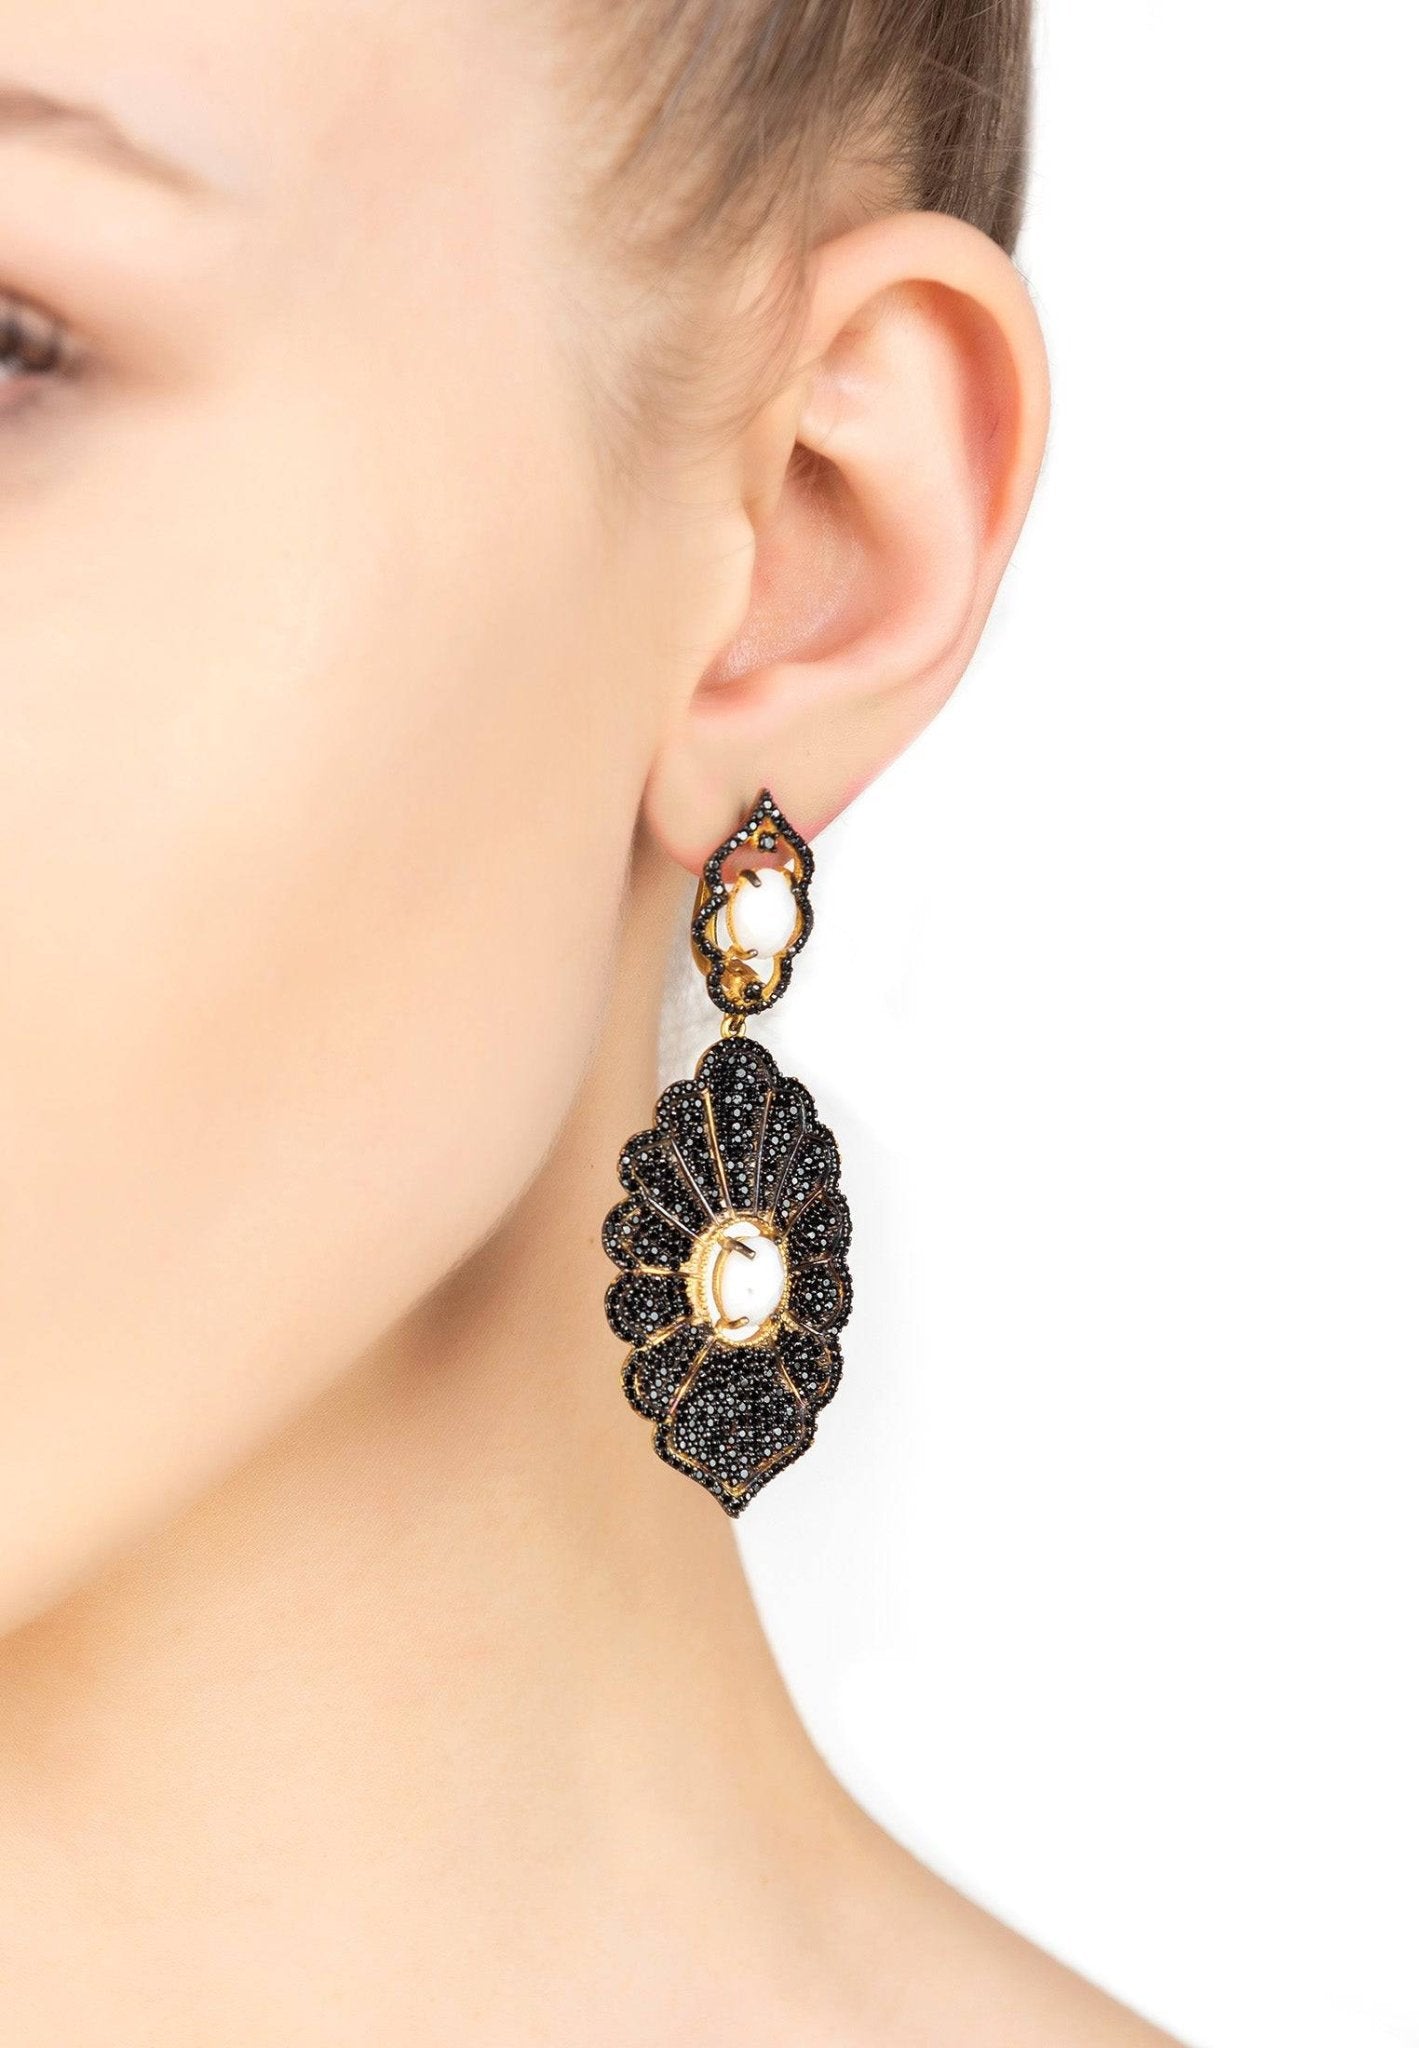 Danbury Earrings Black Gold - LATELITA Earrings